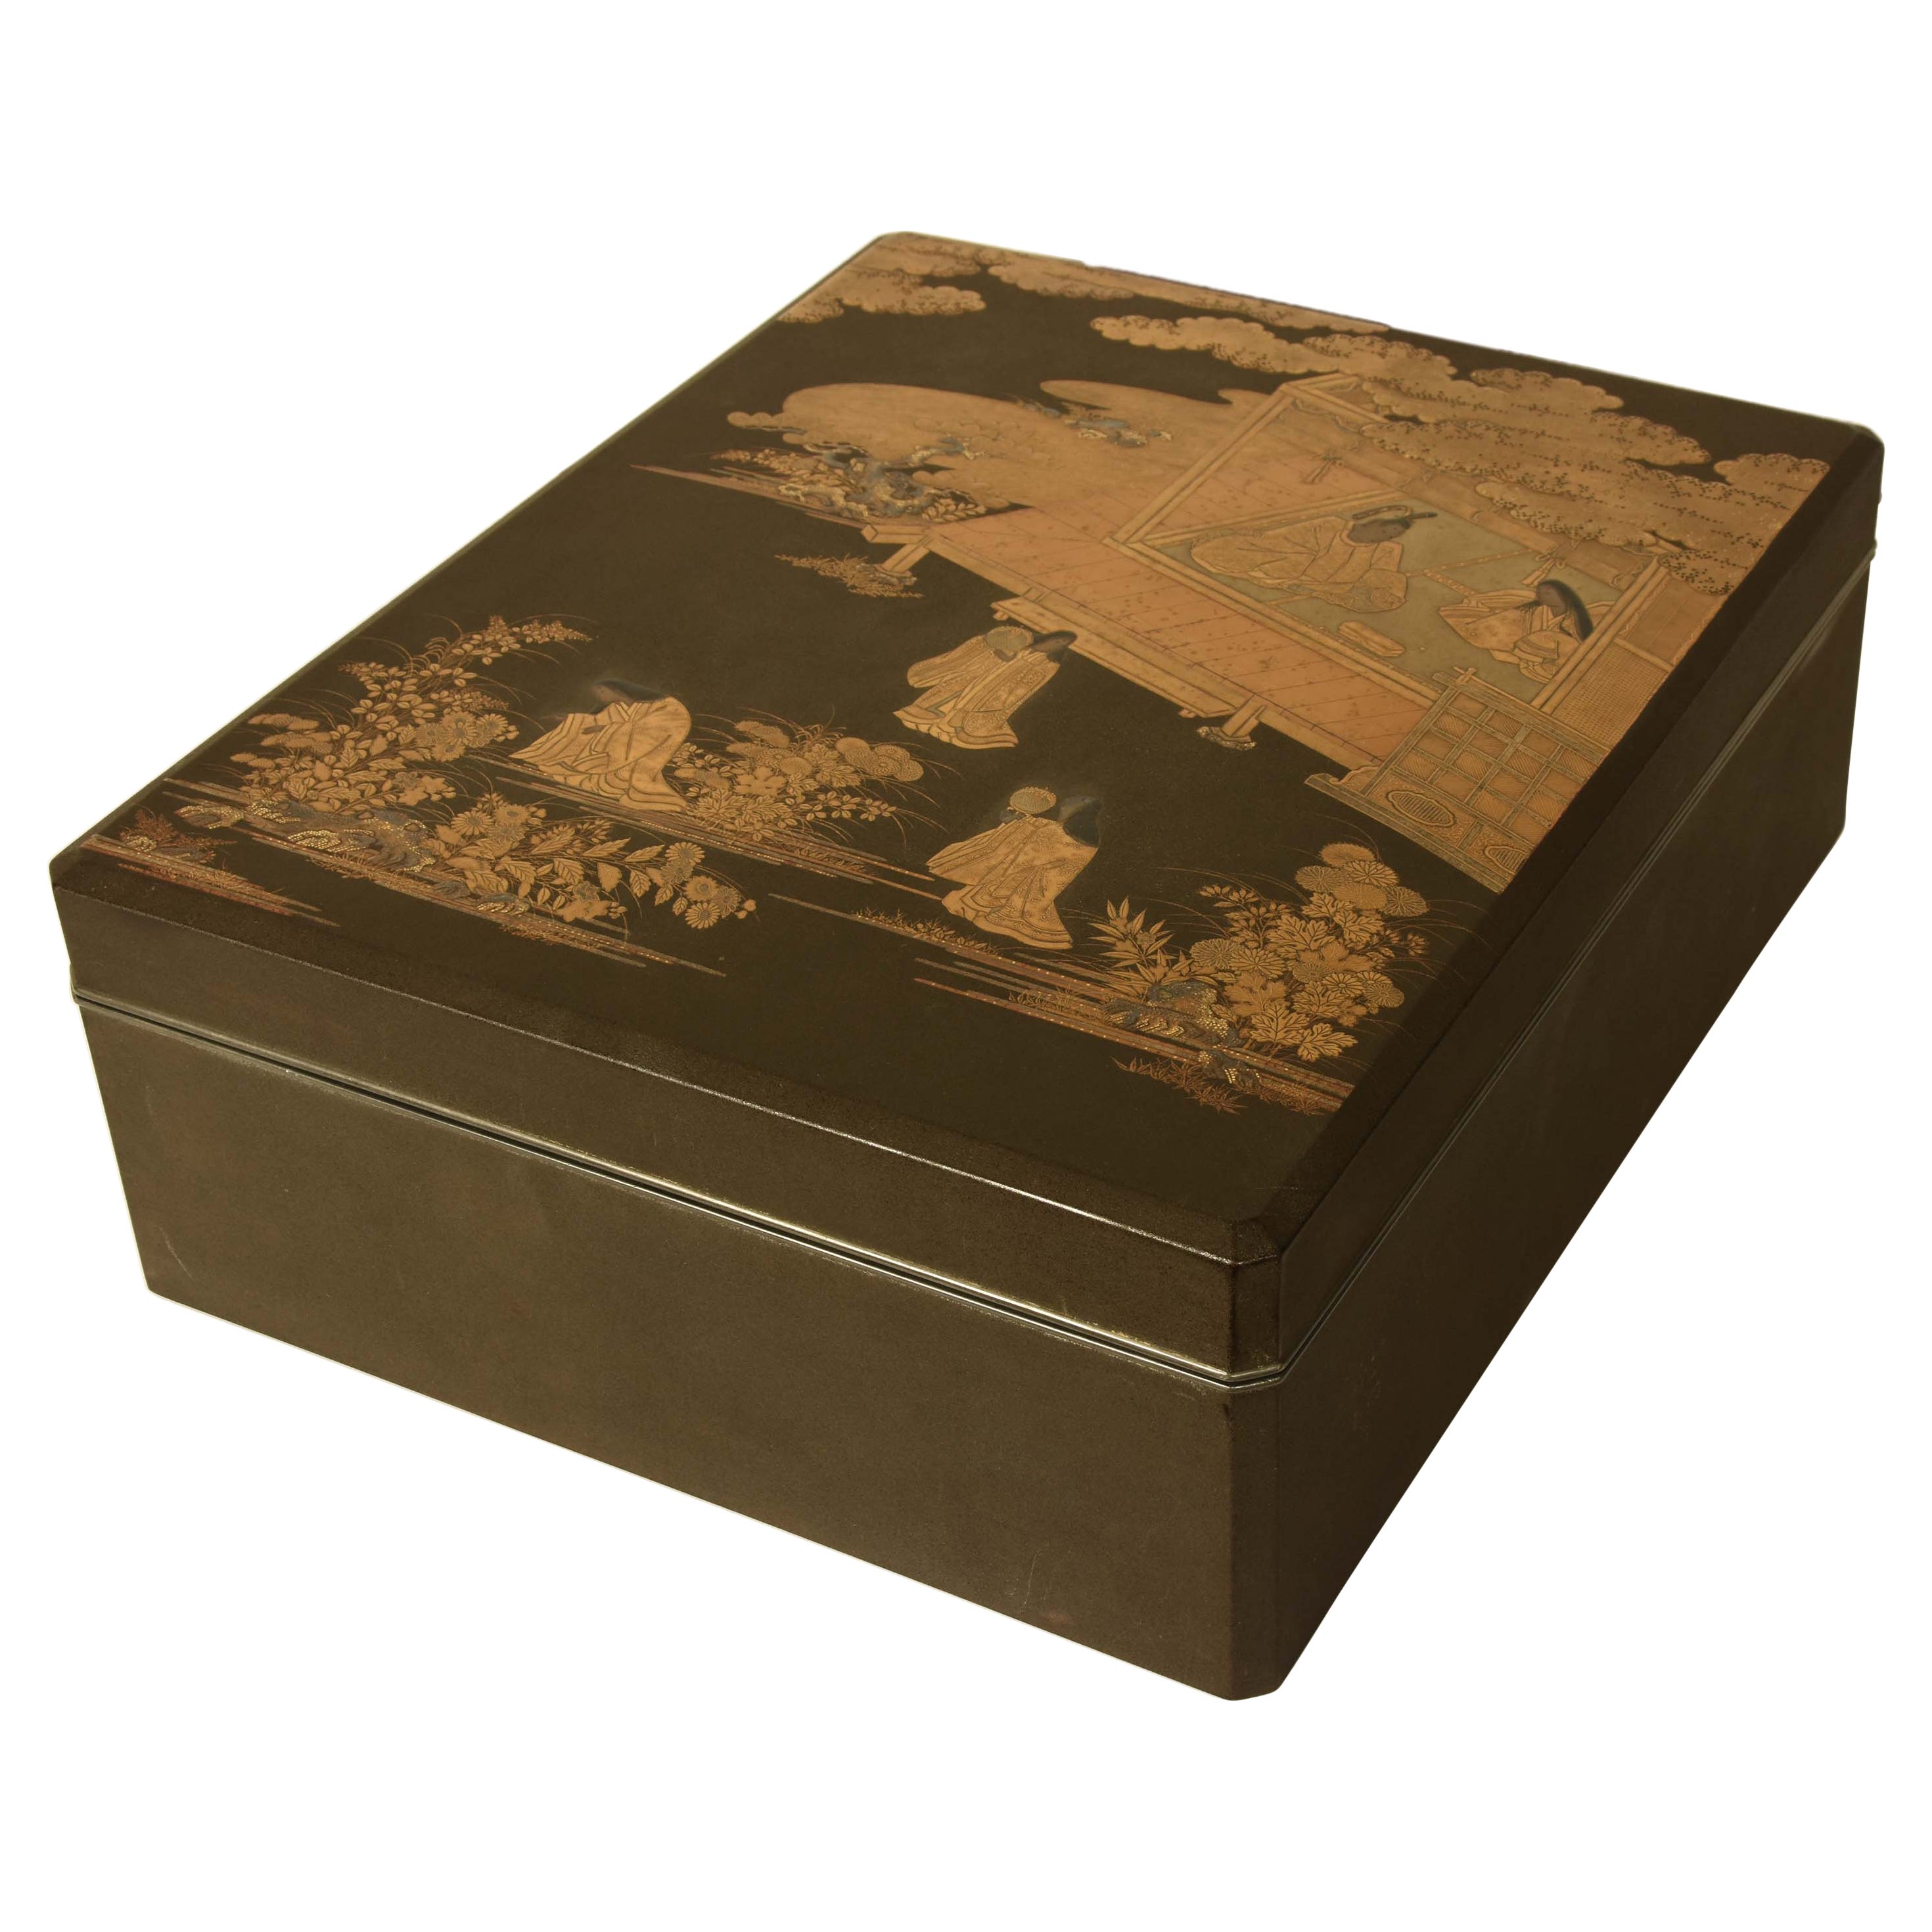 Japanische Dokumentenschachtel aus schwarzem Lack mit goldenem Maki e Design, Meiji-Periode